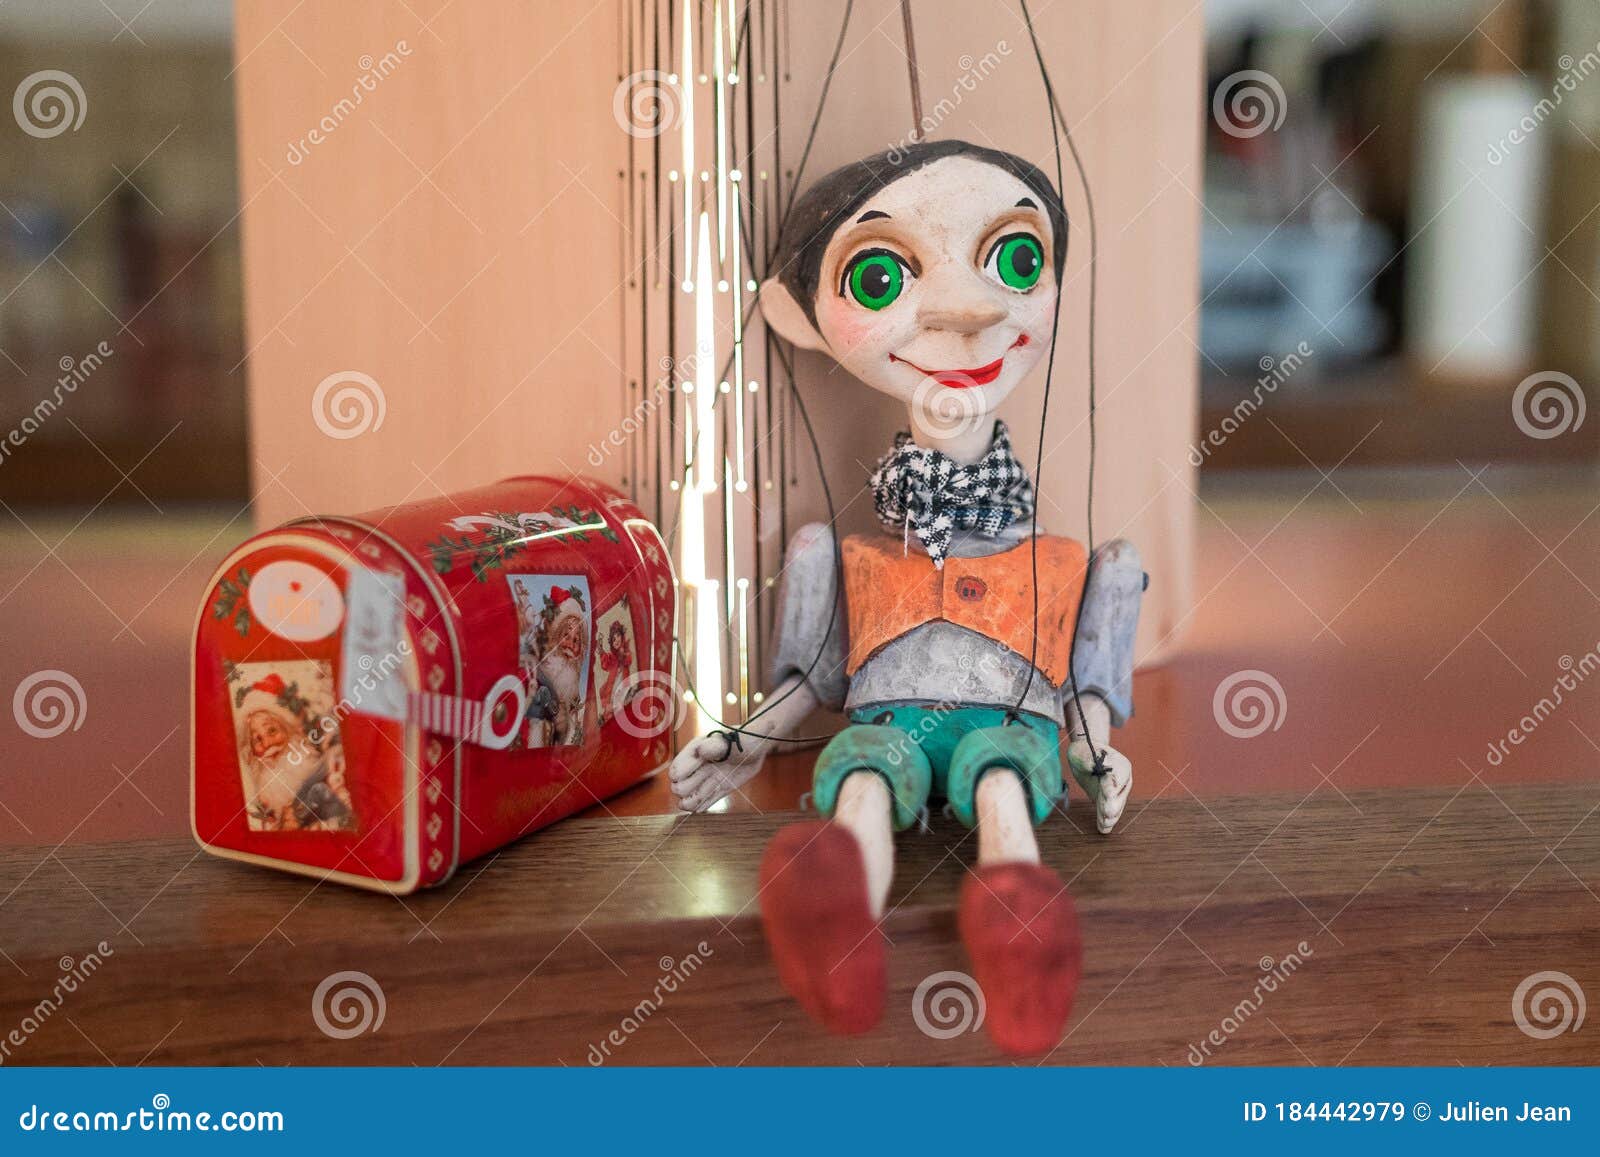 Poppenkast Marionette Uit Praag Uit Tsjechië Stock Afbeelding Image of mooi, 184442979